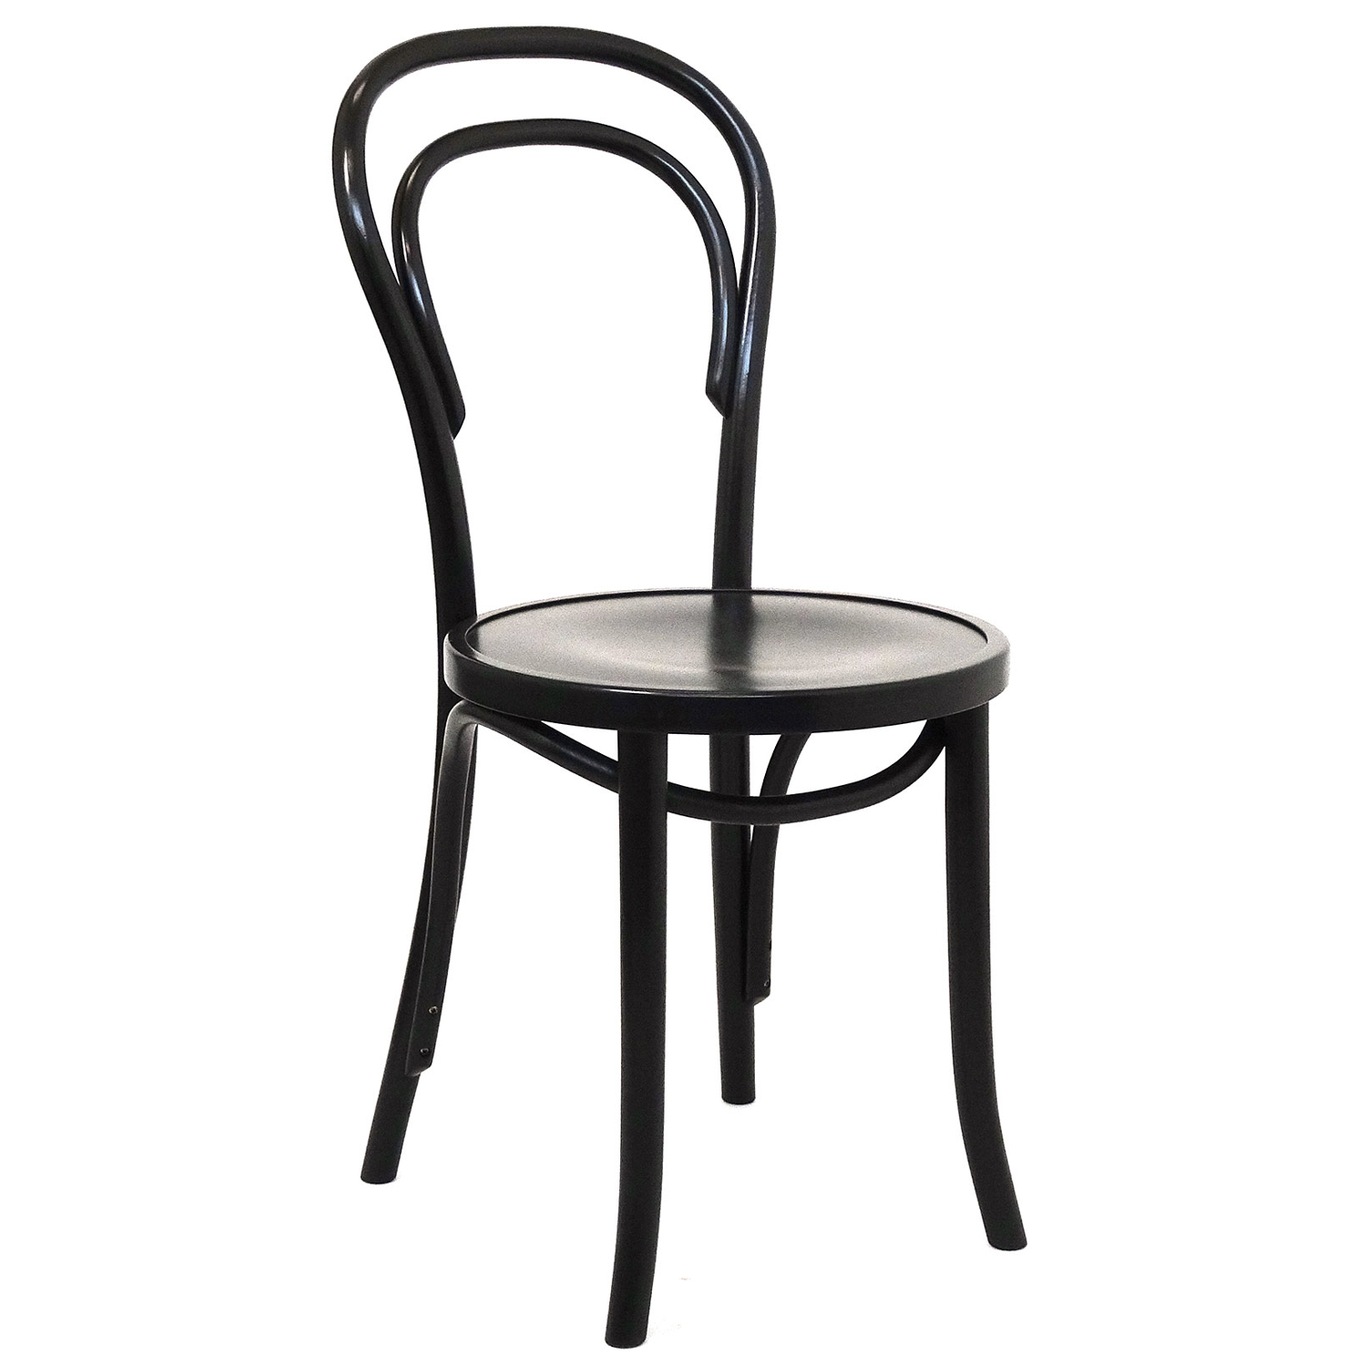 No 14 Café Chair, Black/Veneer Seat - Paged @ RoyalDesign.co.uk